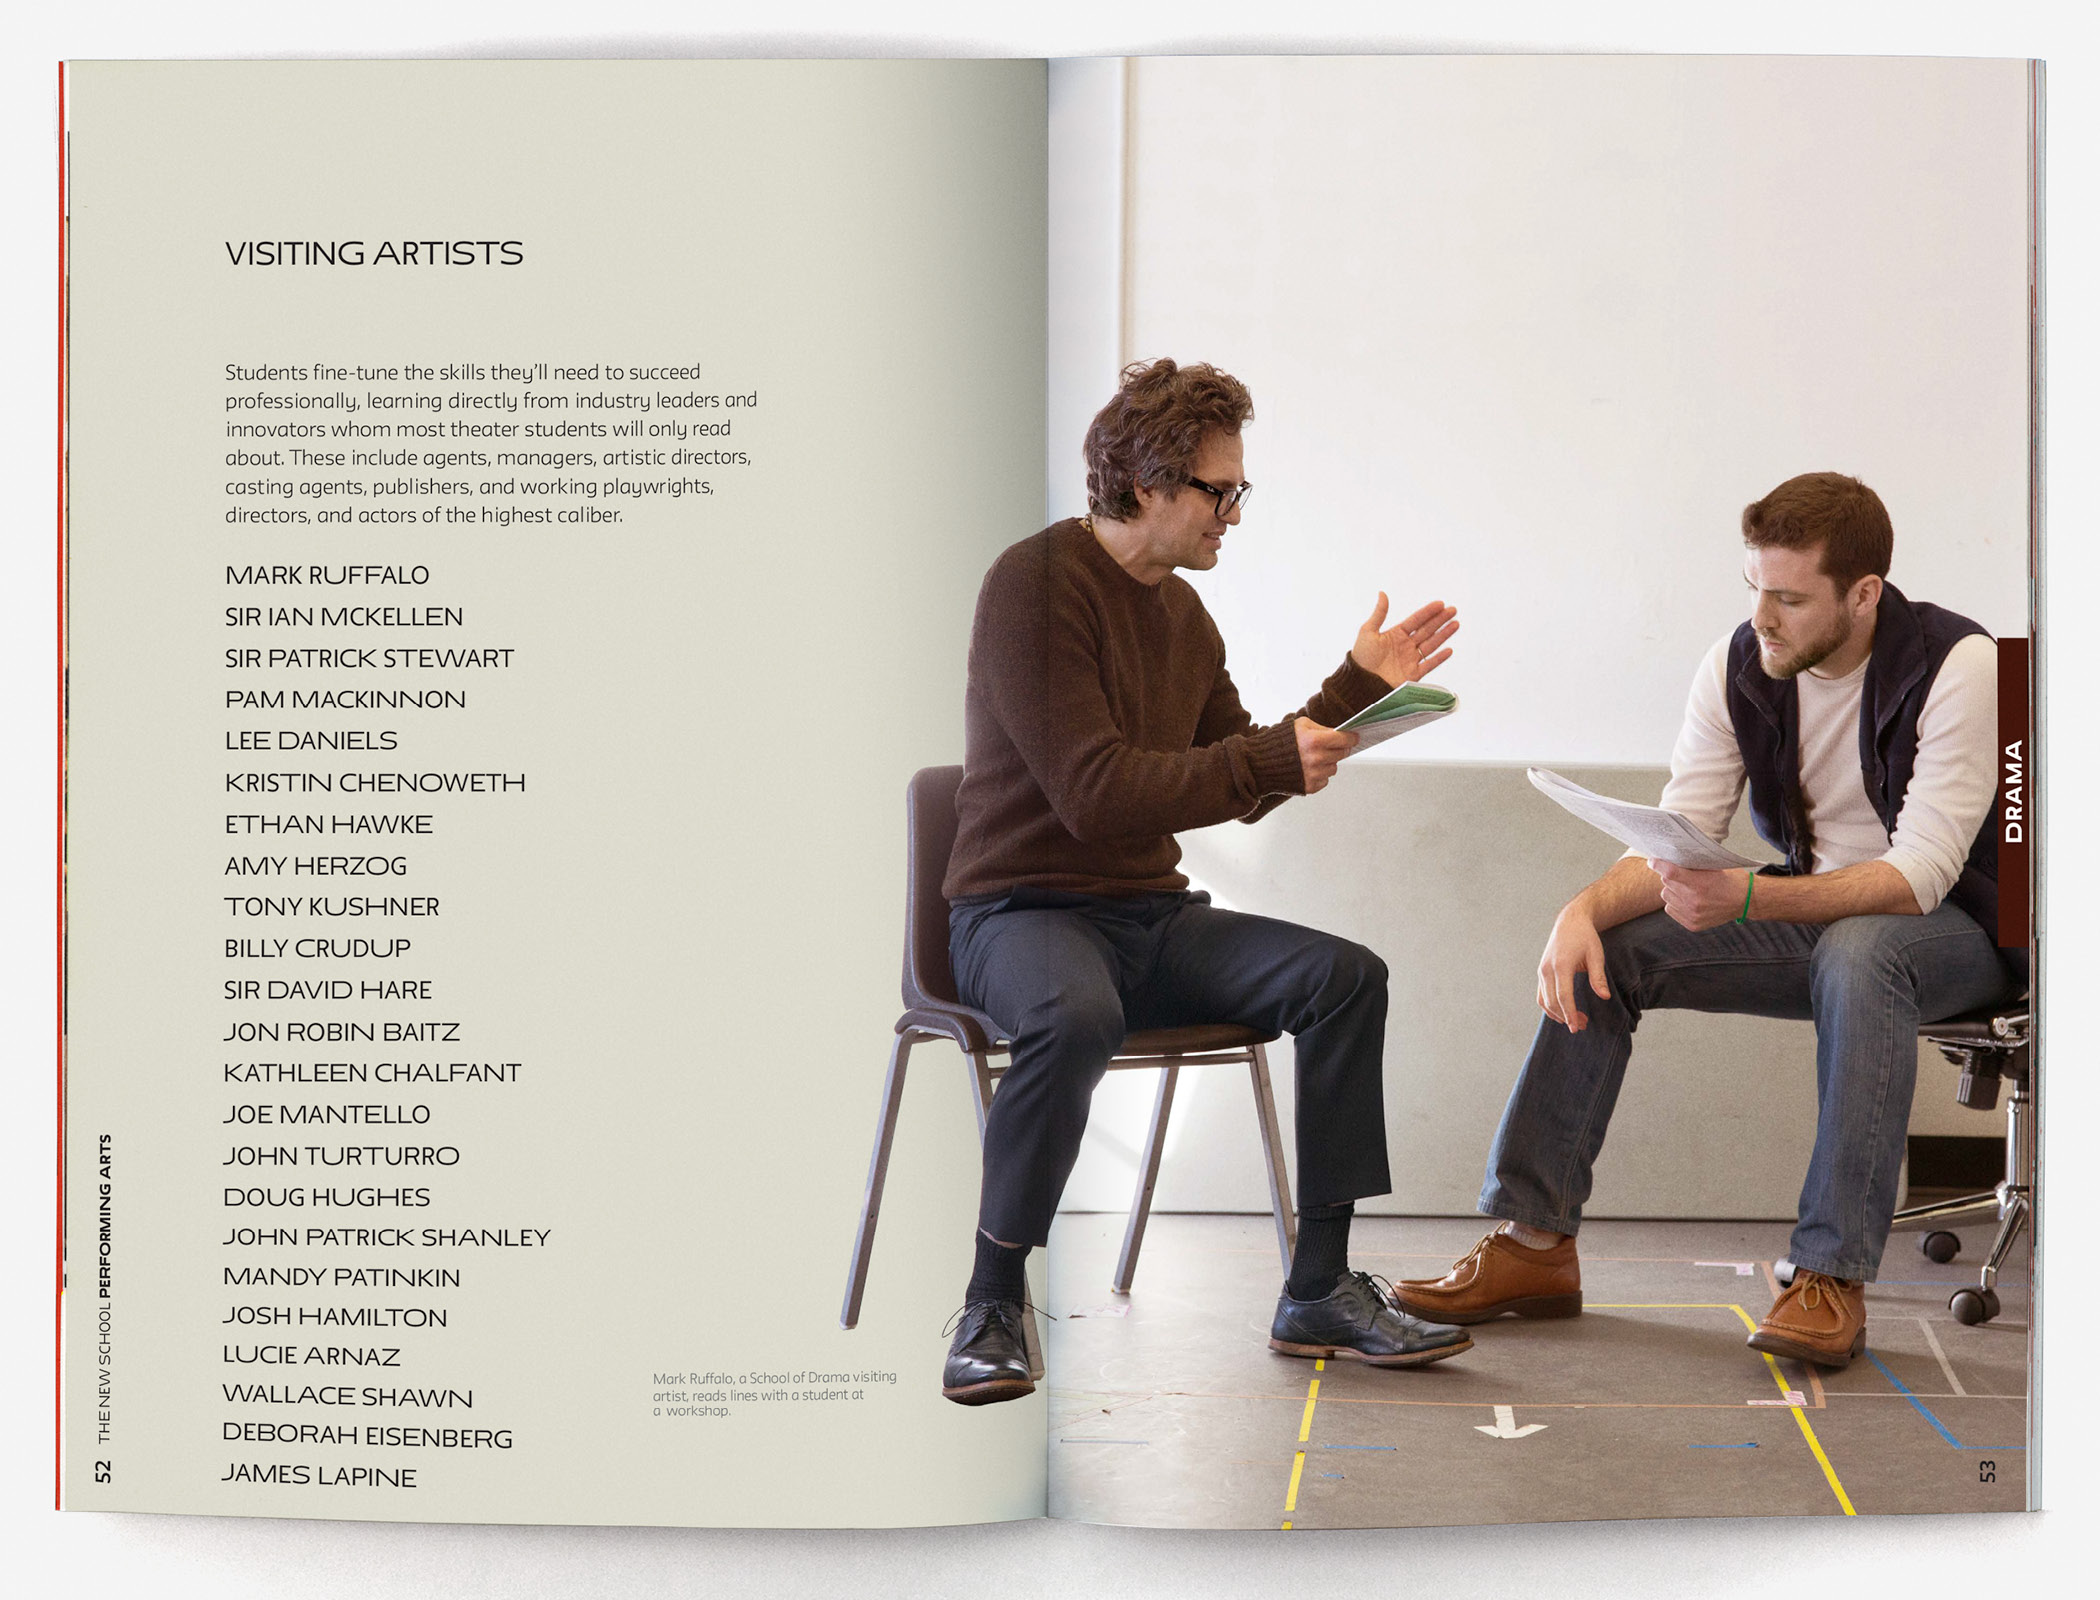 Brochure with photo of Mark Ruffalo teaching a master class